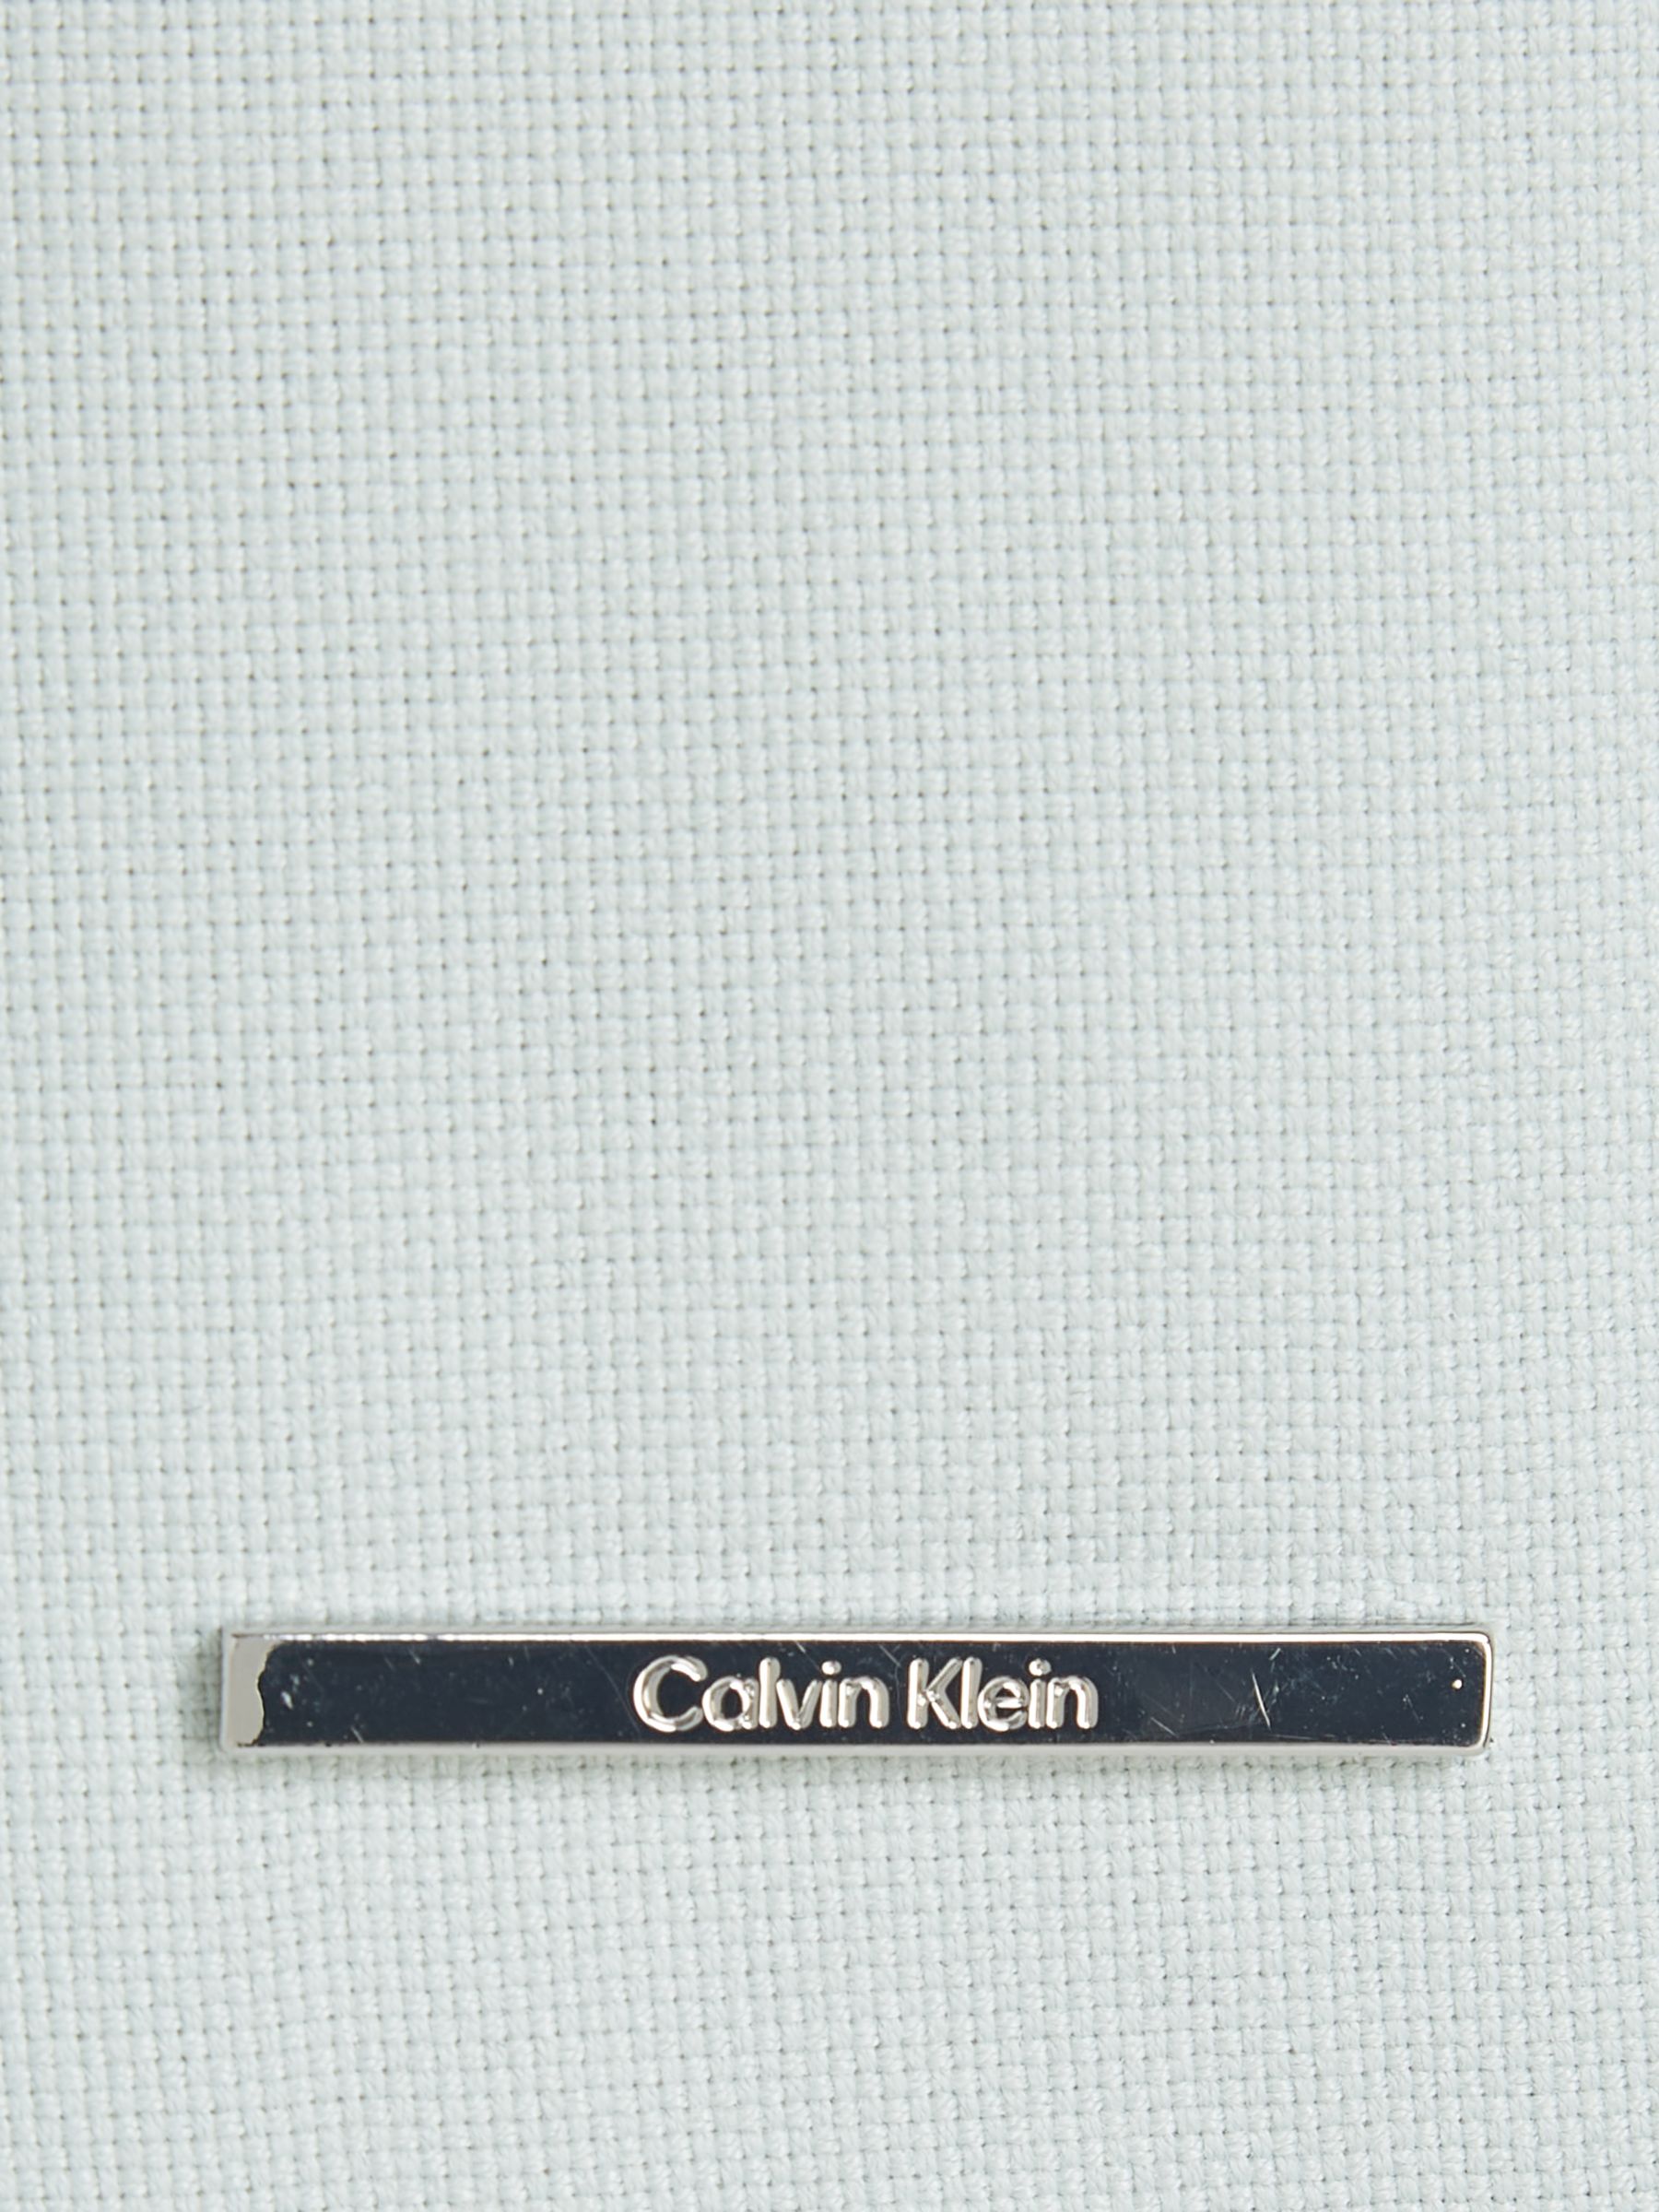 Buy Calvin Klein Essential Tailored Blazer, Morning Frost Online at johnlewis.com